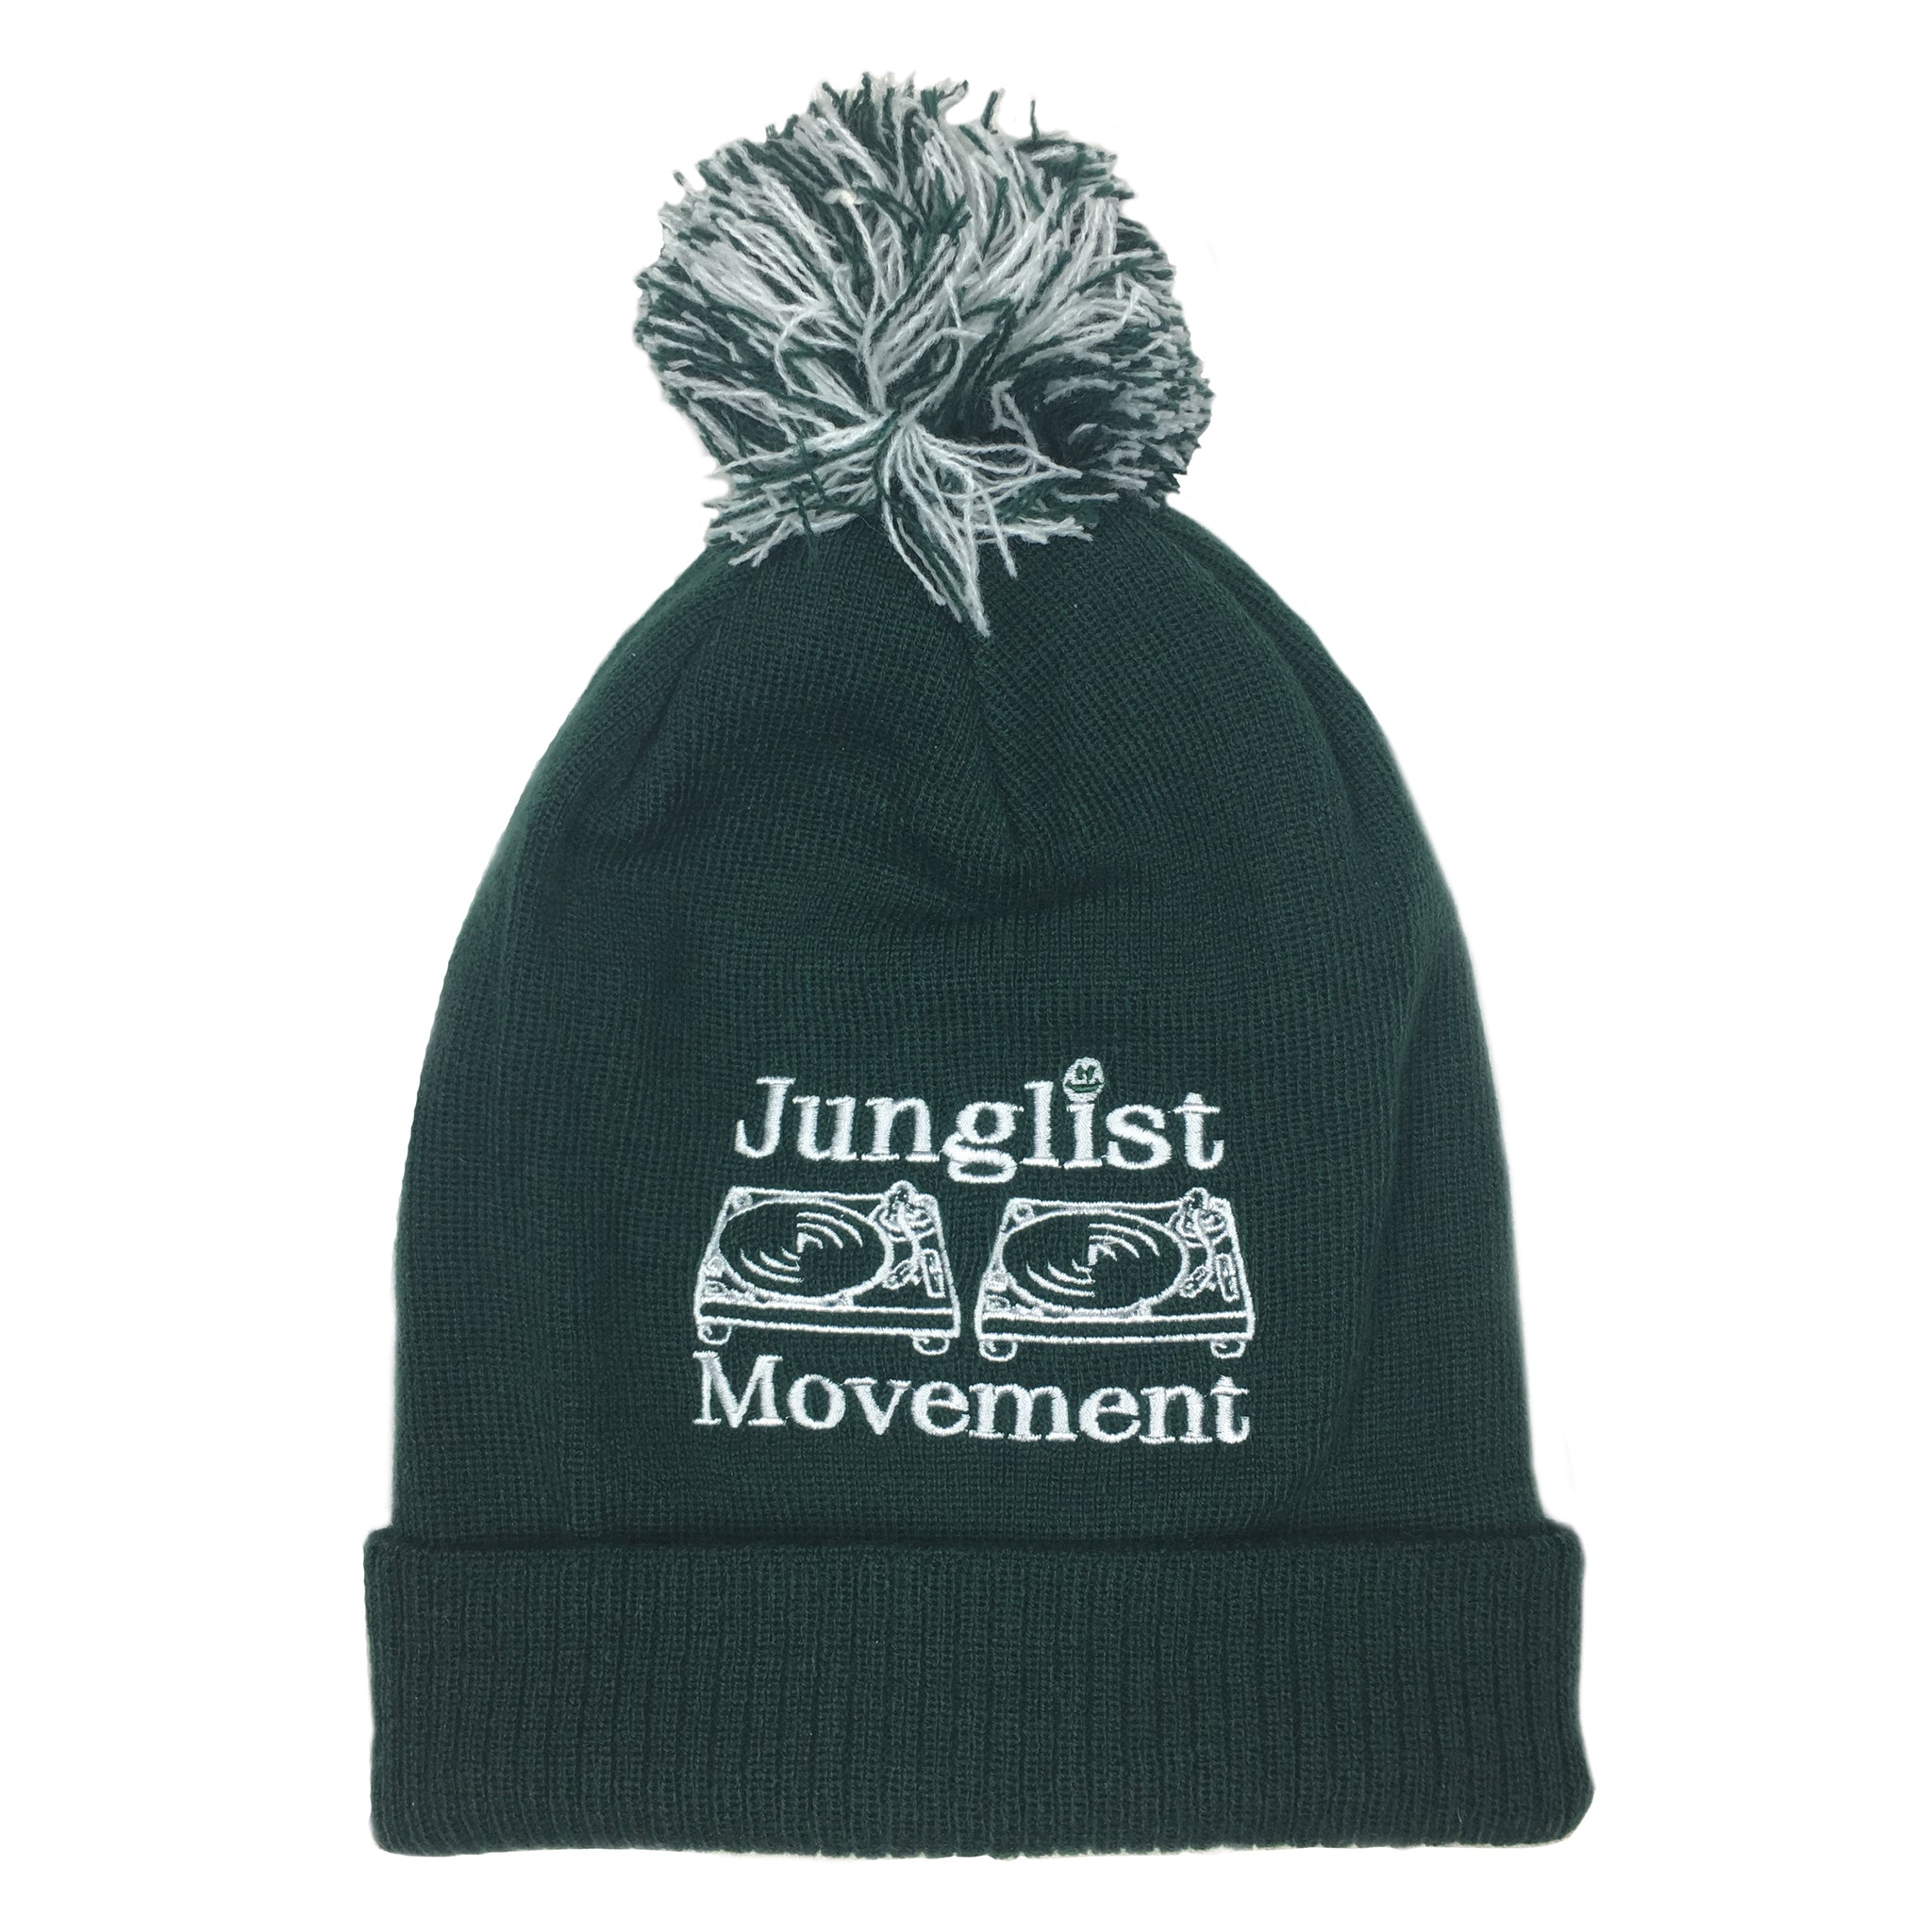 A.S. Embriodered Junglist Movement Snowstar Beanie Hat (Bottle Green)